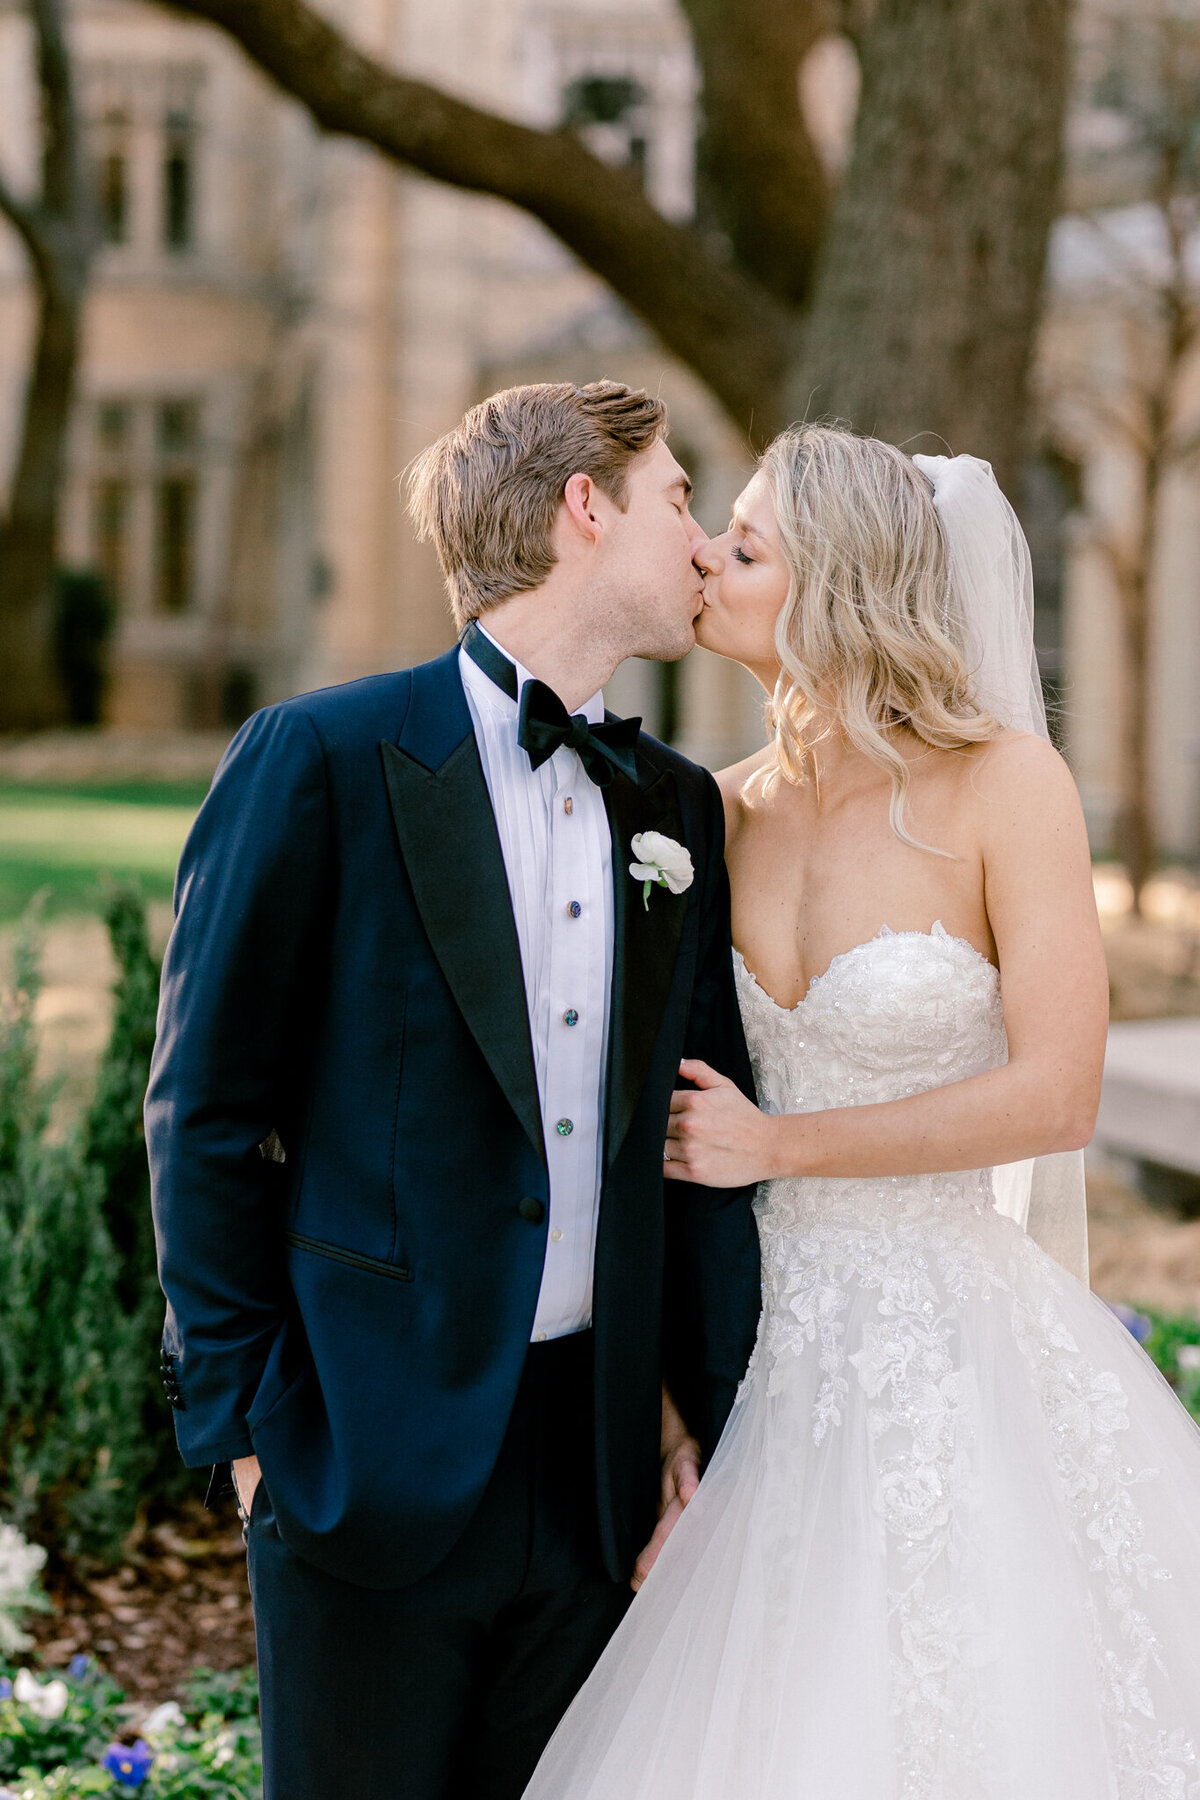 Shelby & Thomas's Wedding at HPUMC The Room on Main | Dallas Wedding Photographer | Sami Kathryn Photography-7